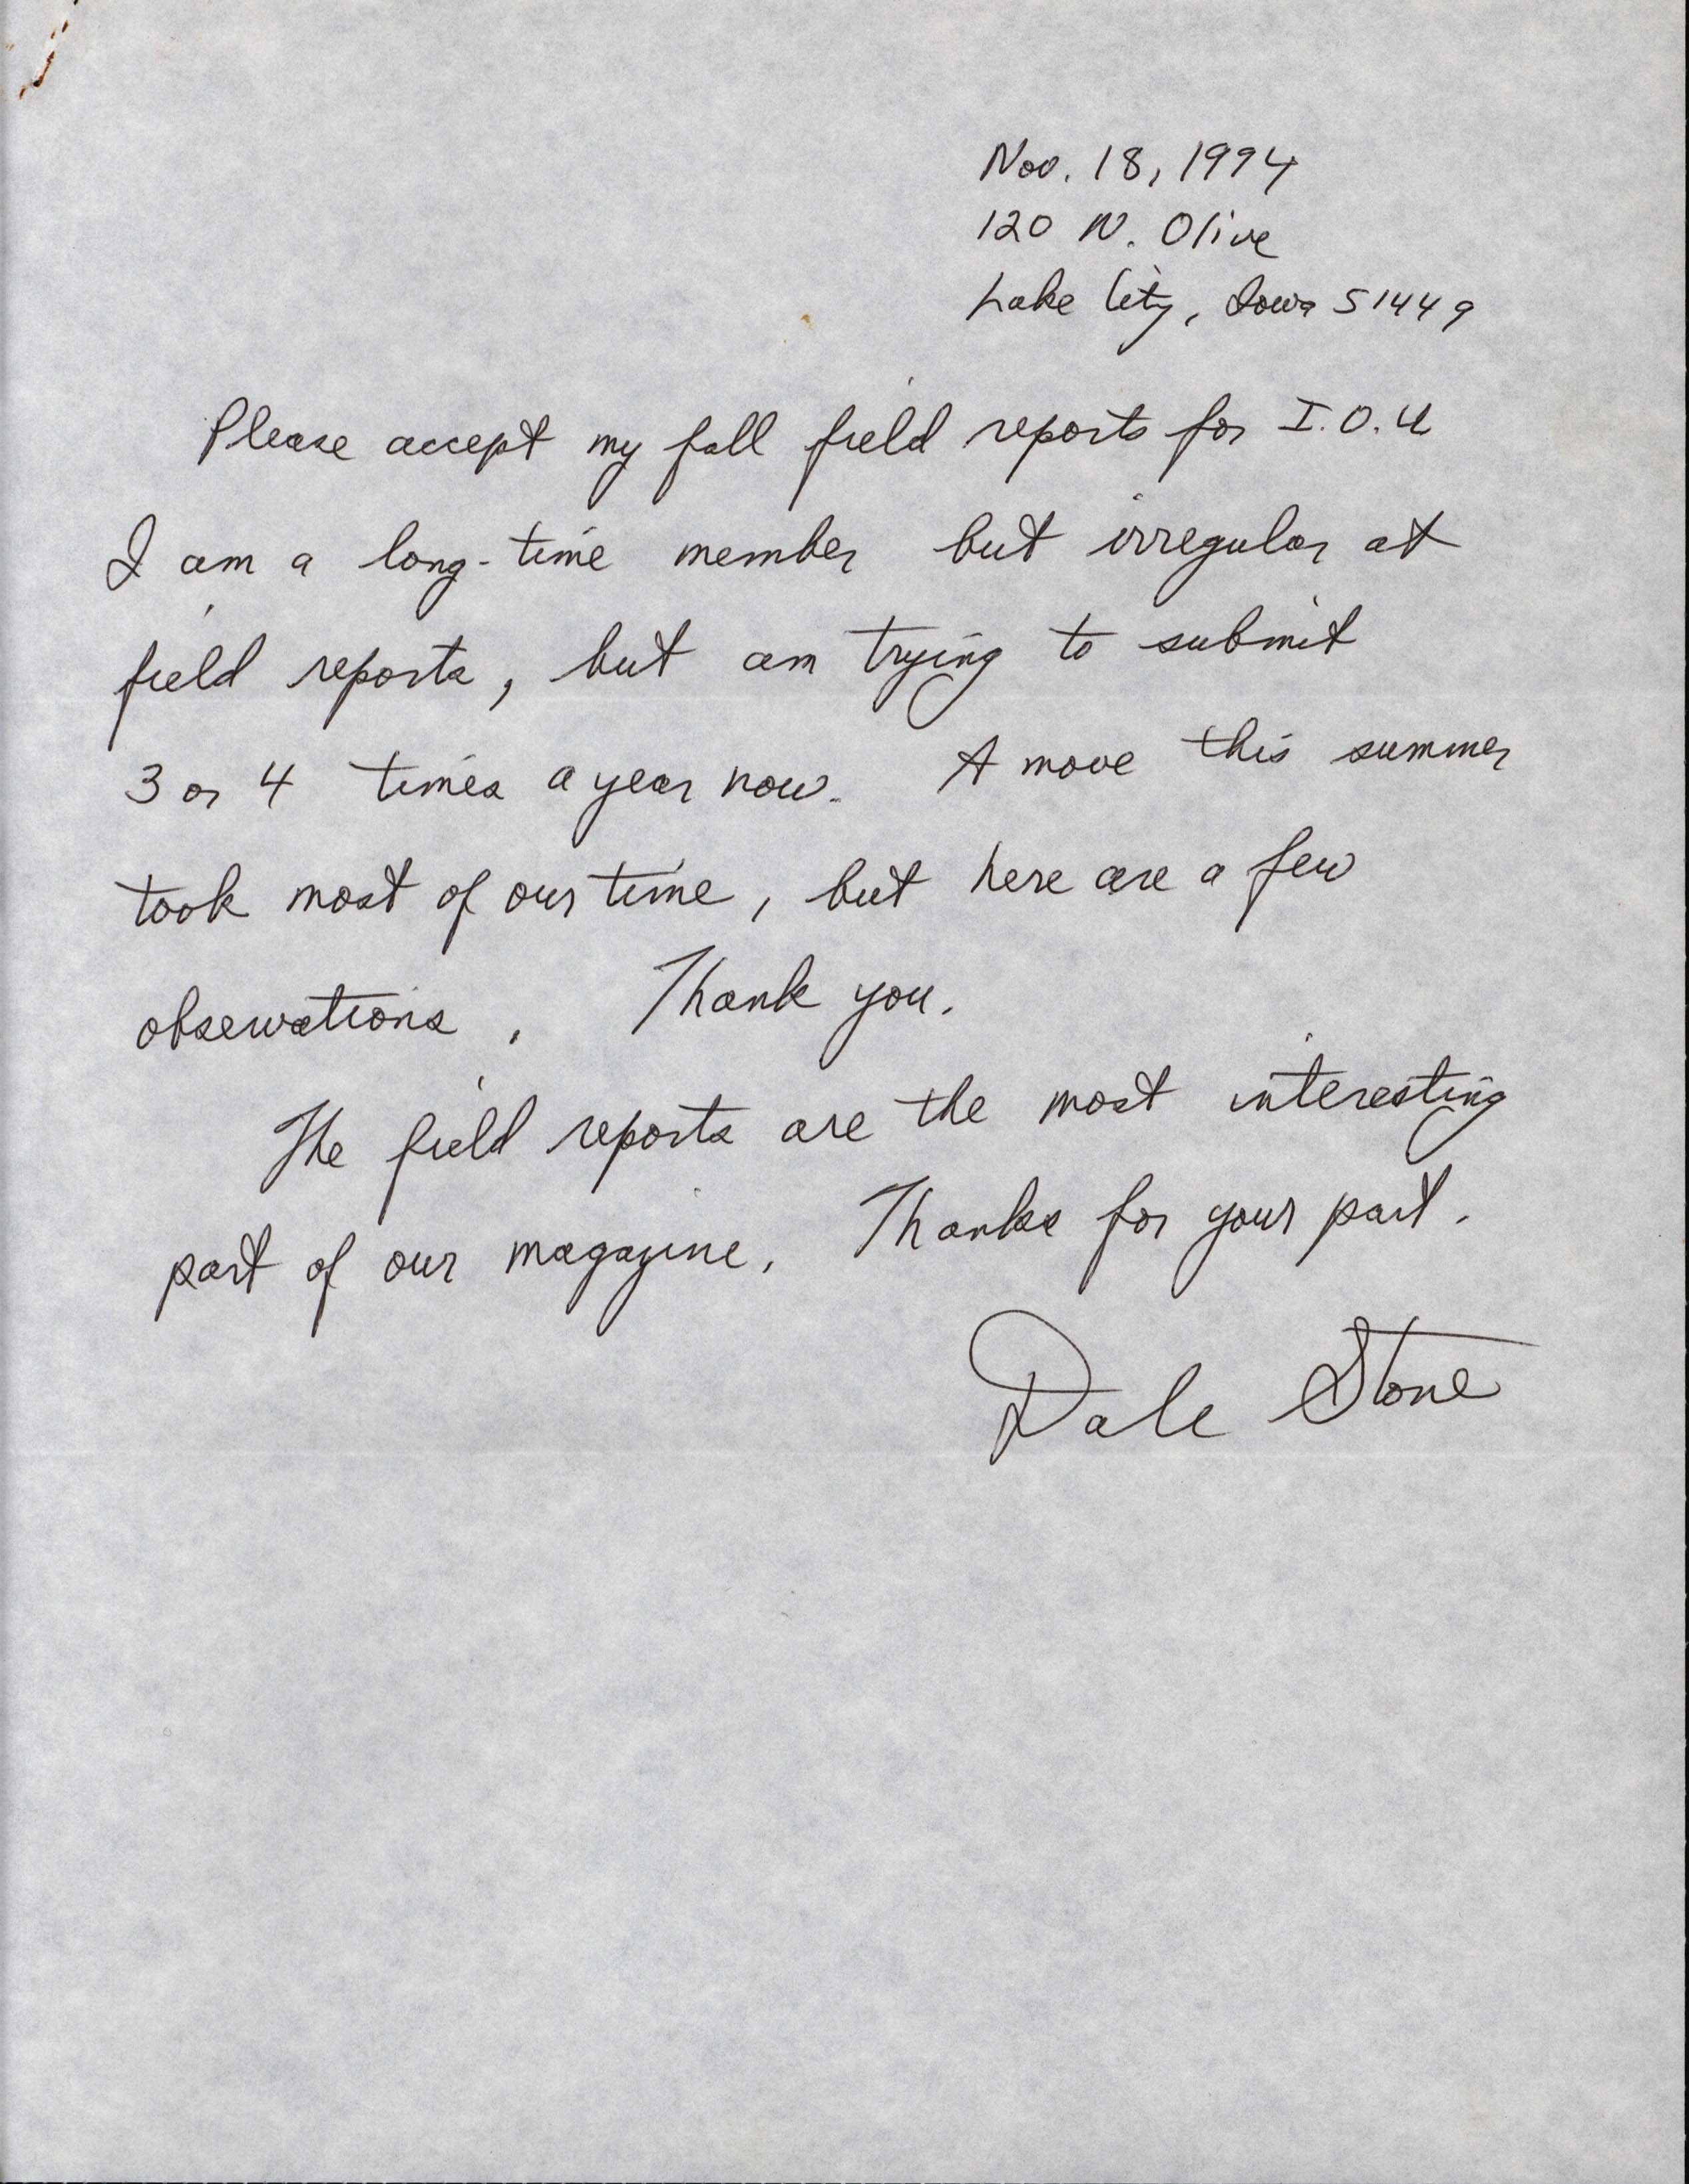 Dale Stone letter to Thomas Kent regarding fall field reports, November 18, 1994